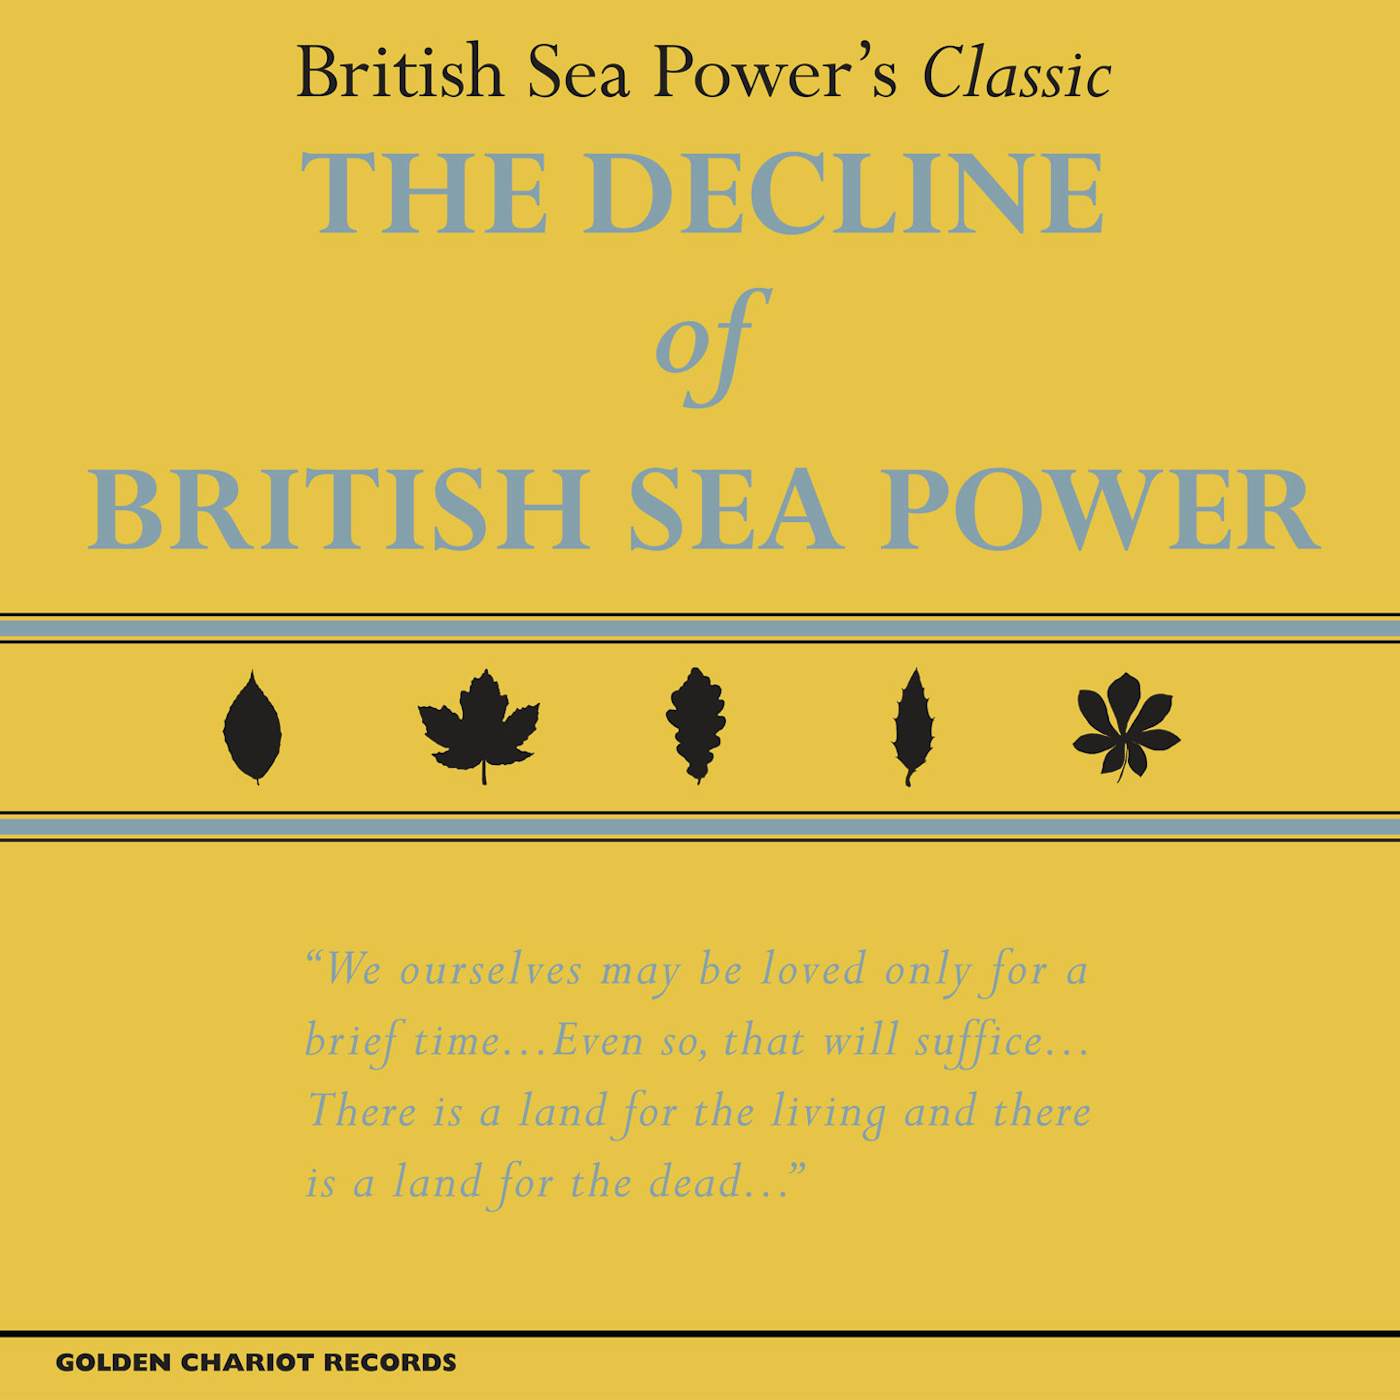 DECLINE OF BRITISH SEA POWER CD